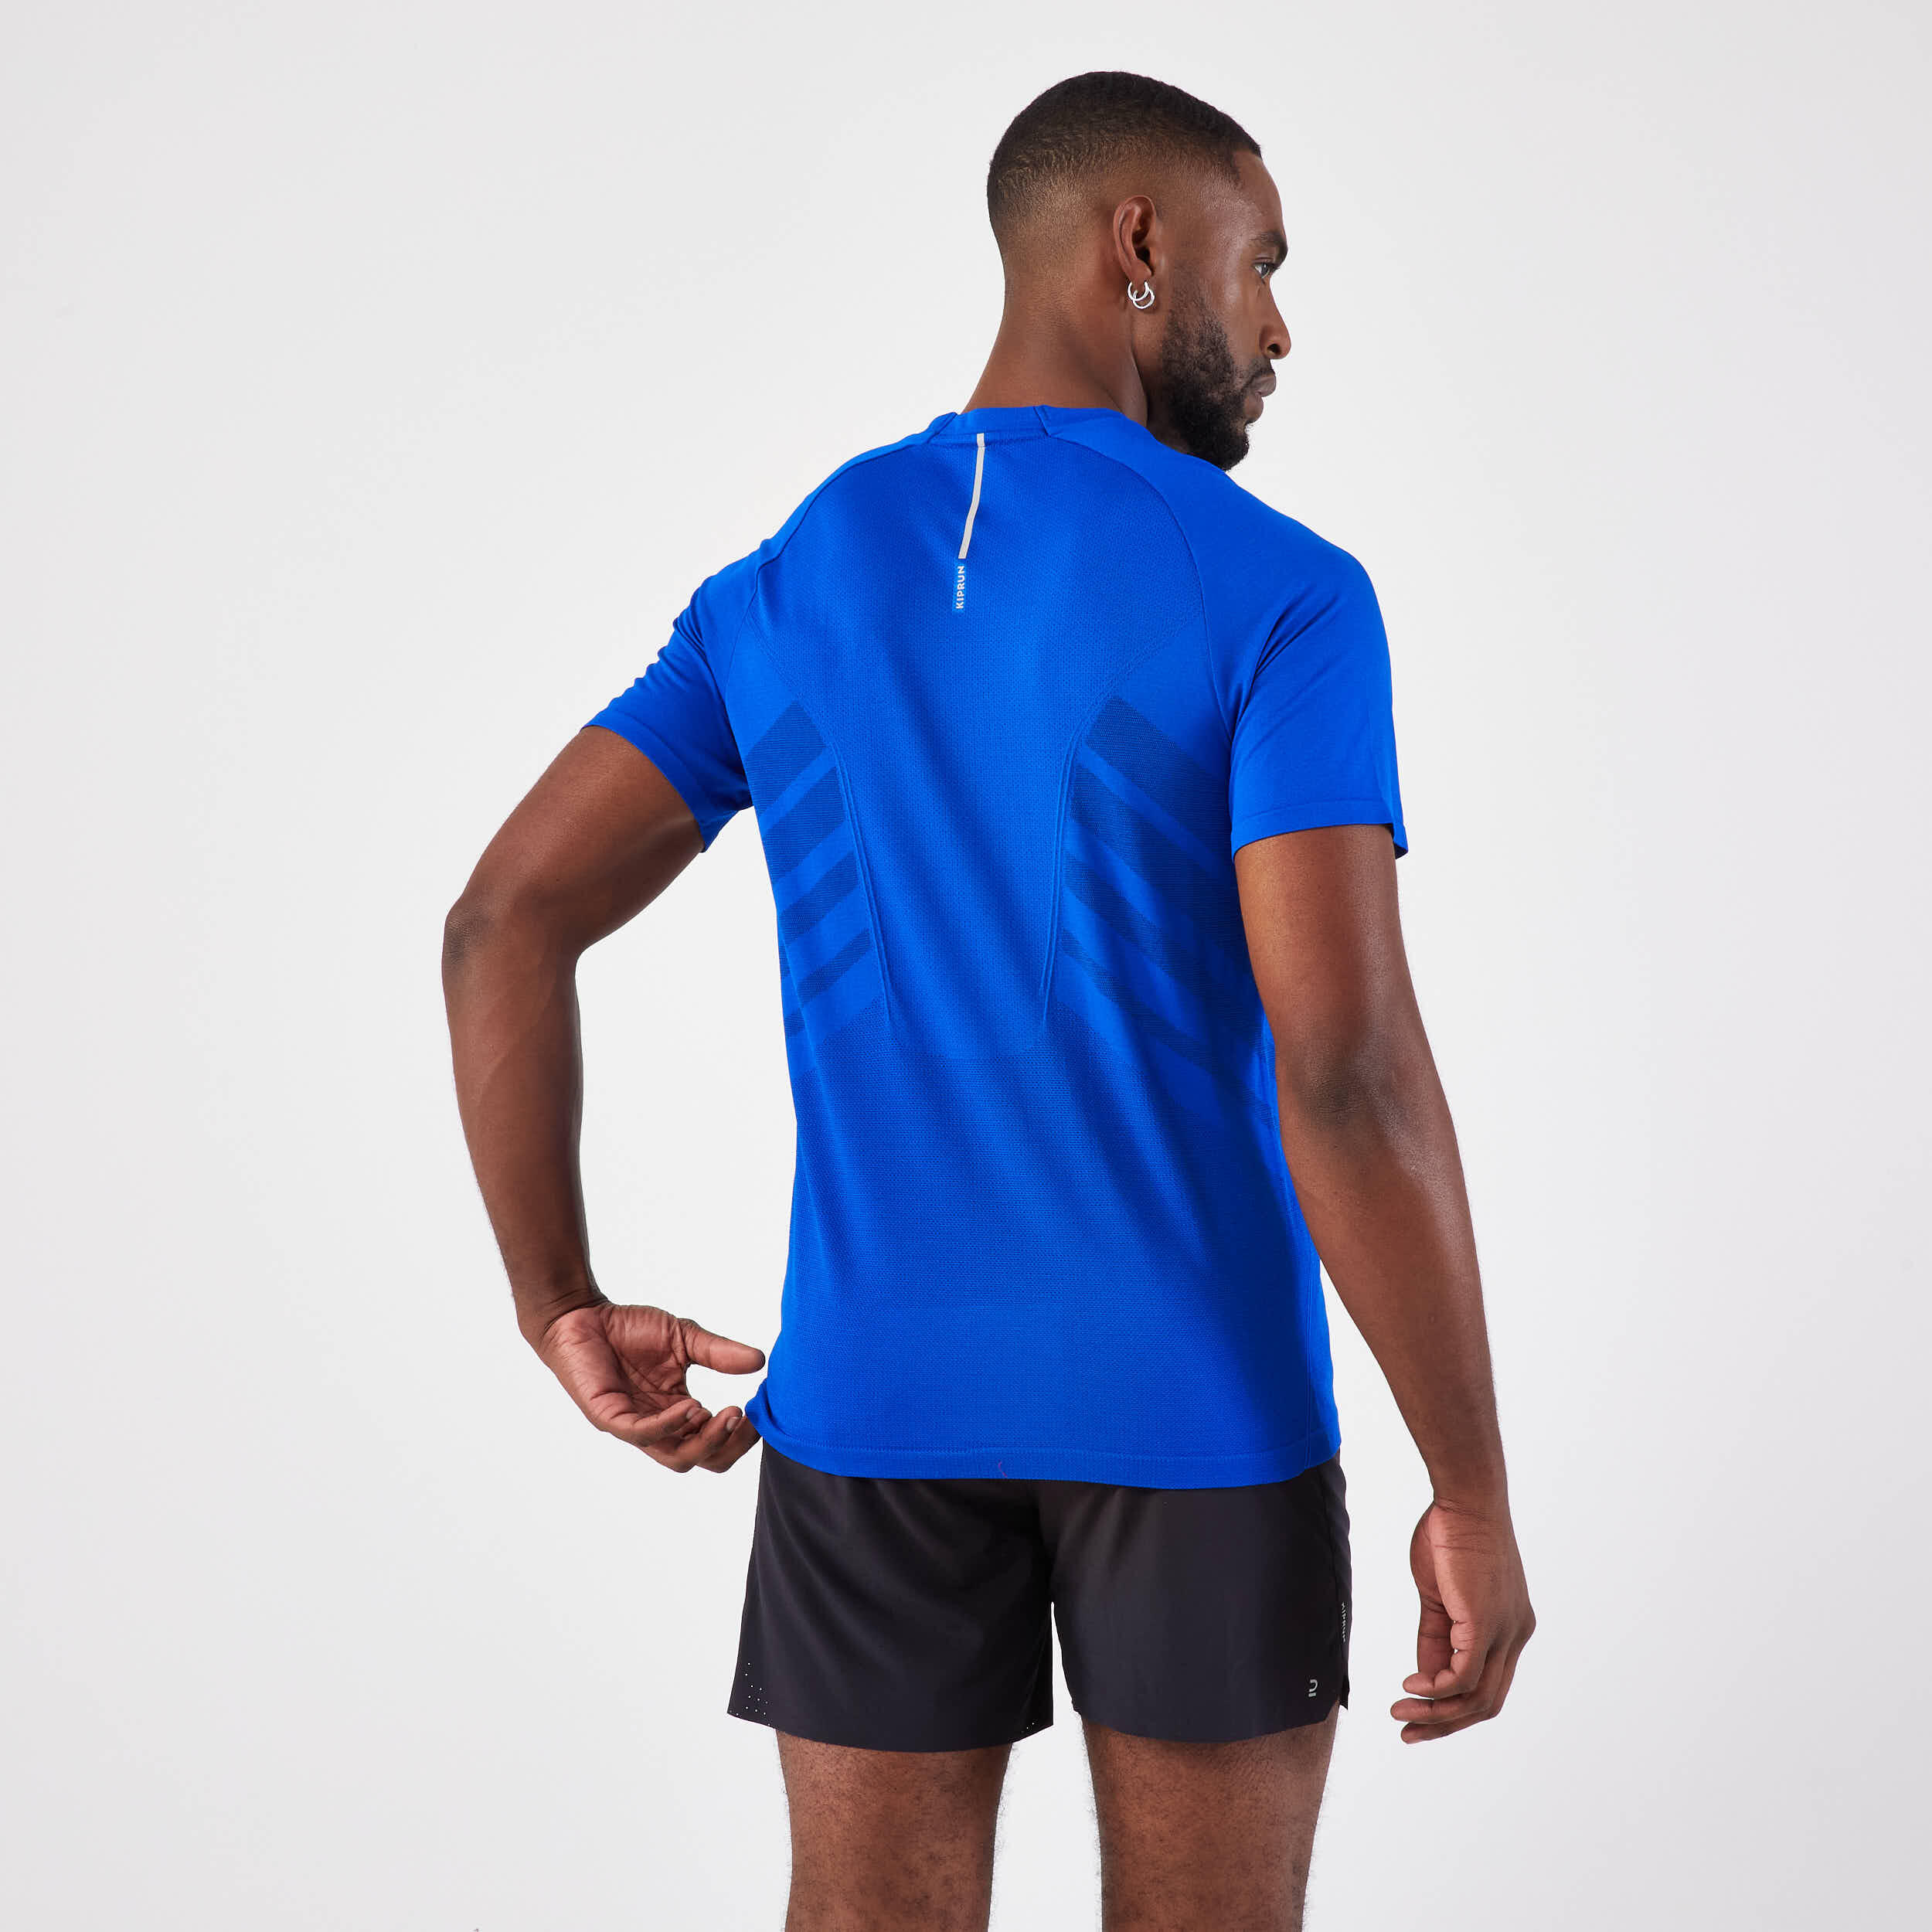 Men's Running T-Shirt - Run 500 - Bright indigo, steel blue - Kiprun ...